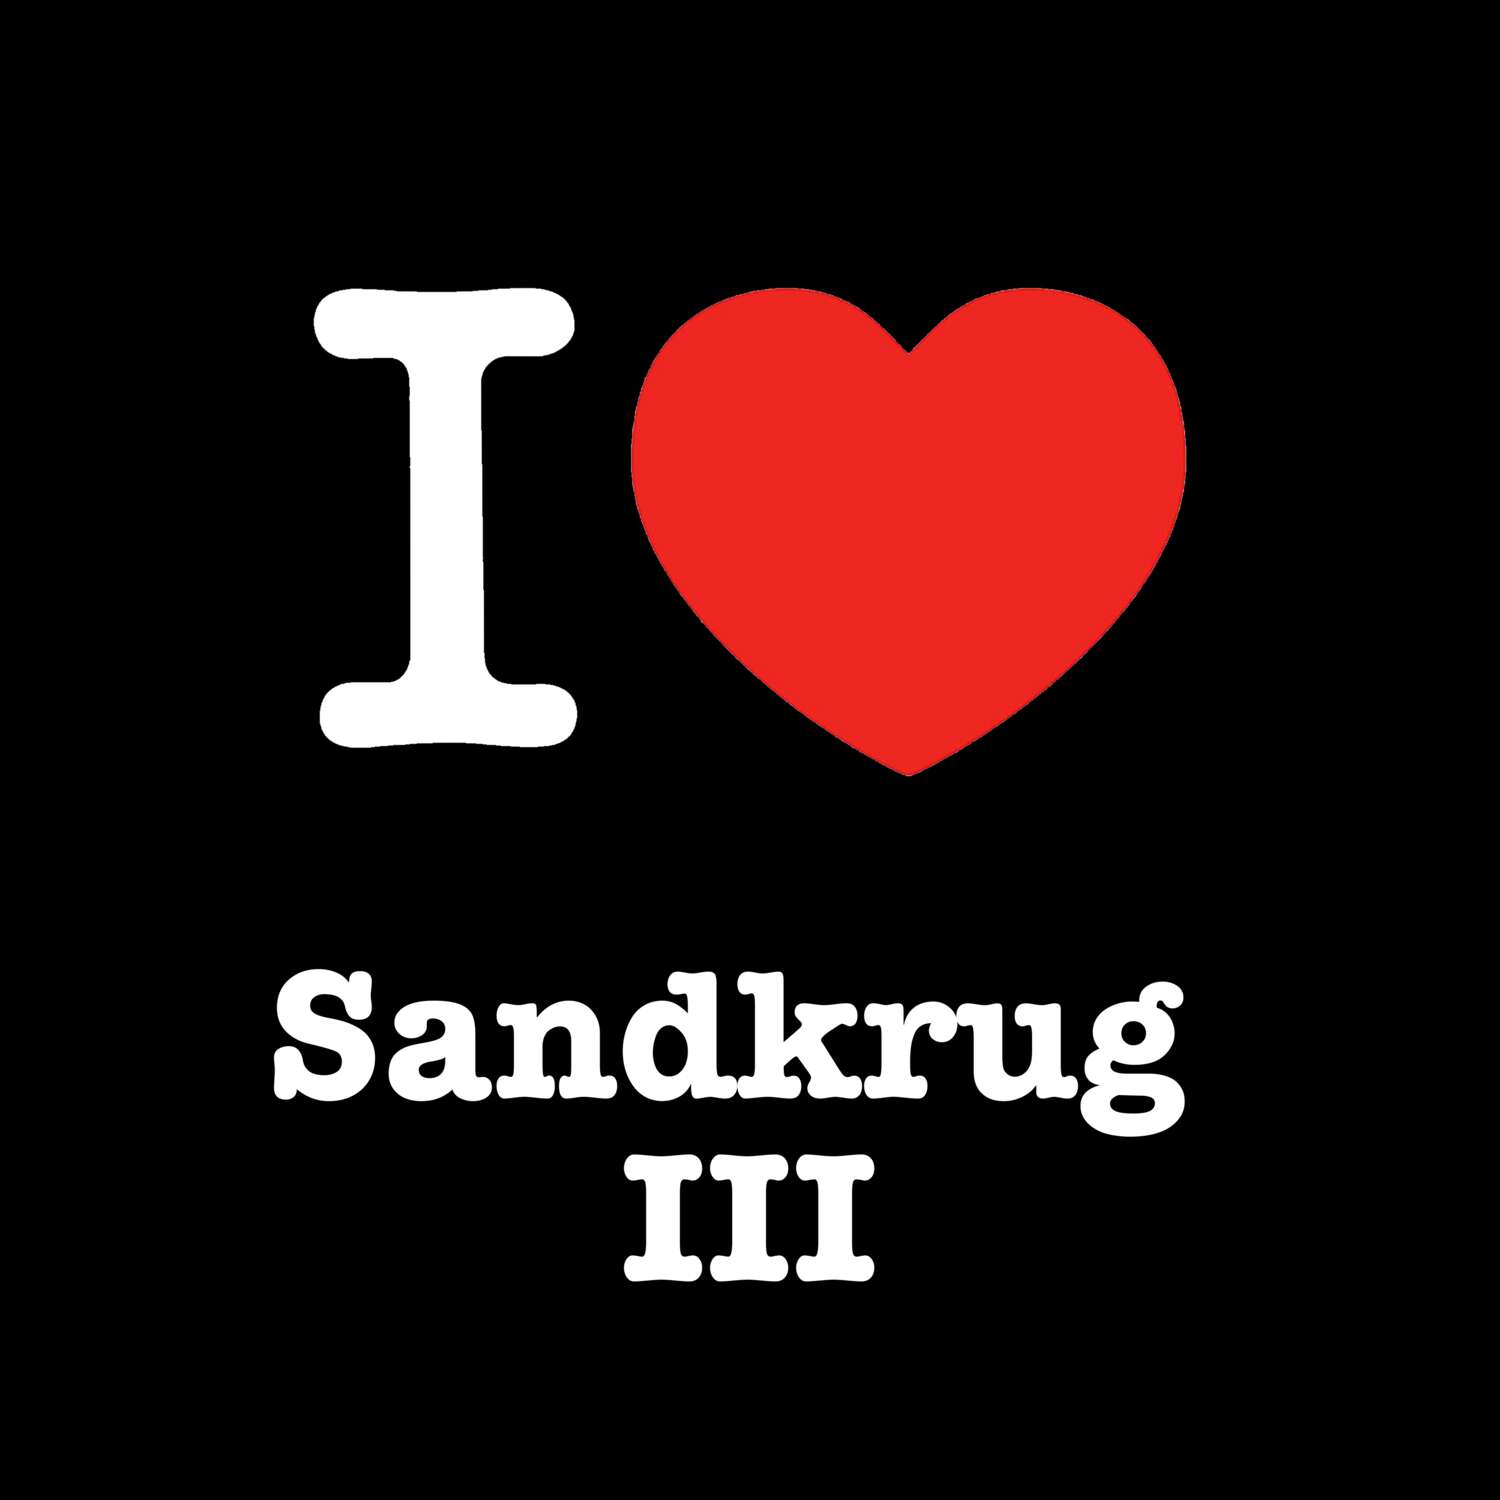 Sandkrug III T-Shirt »I love«